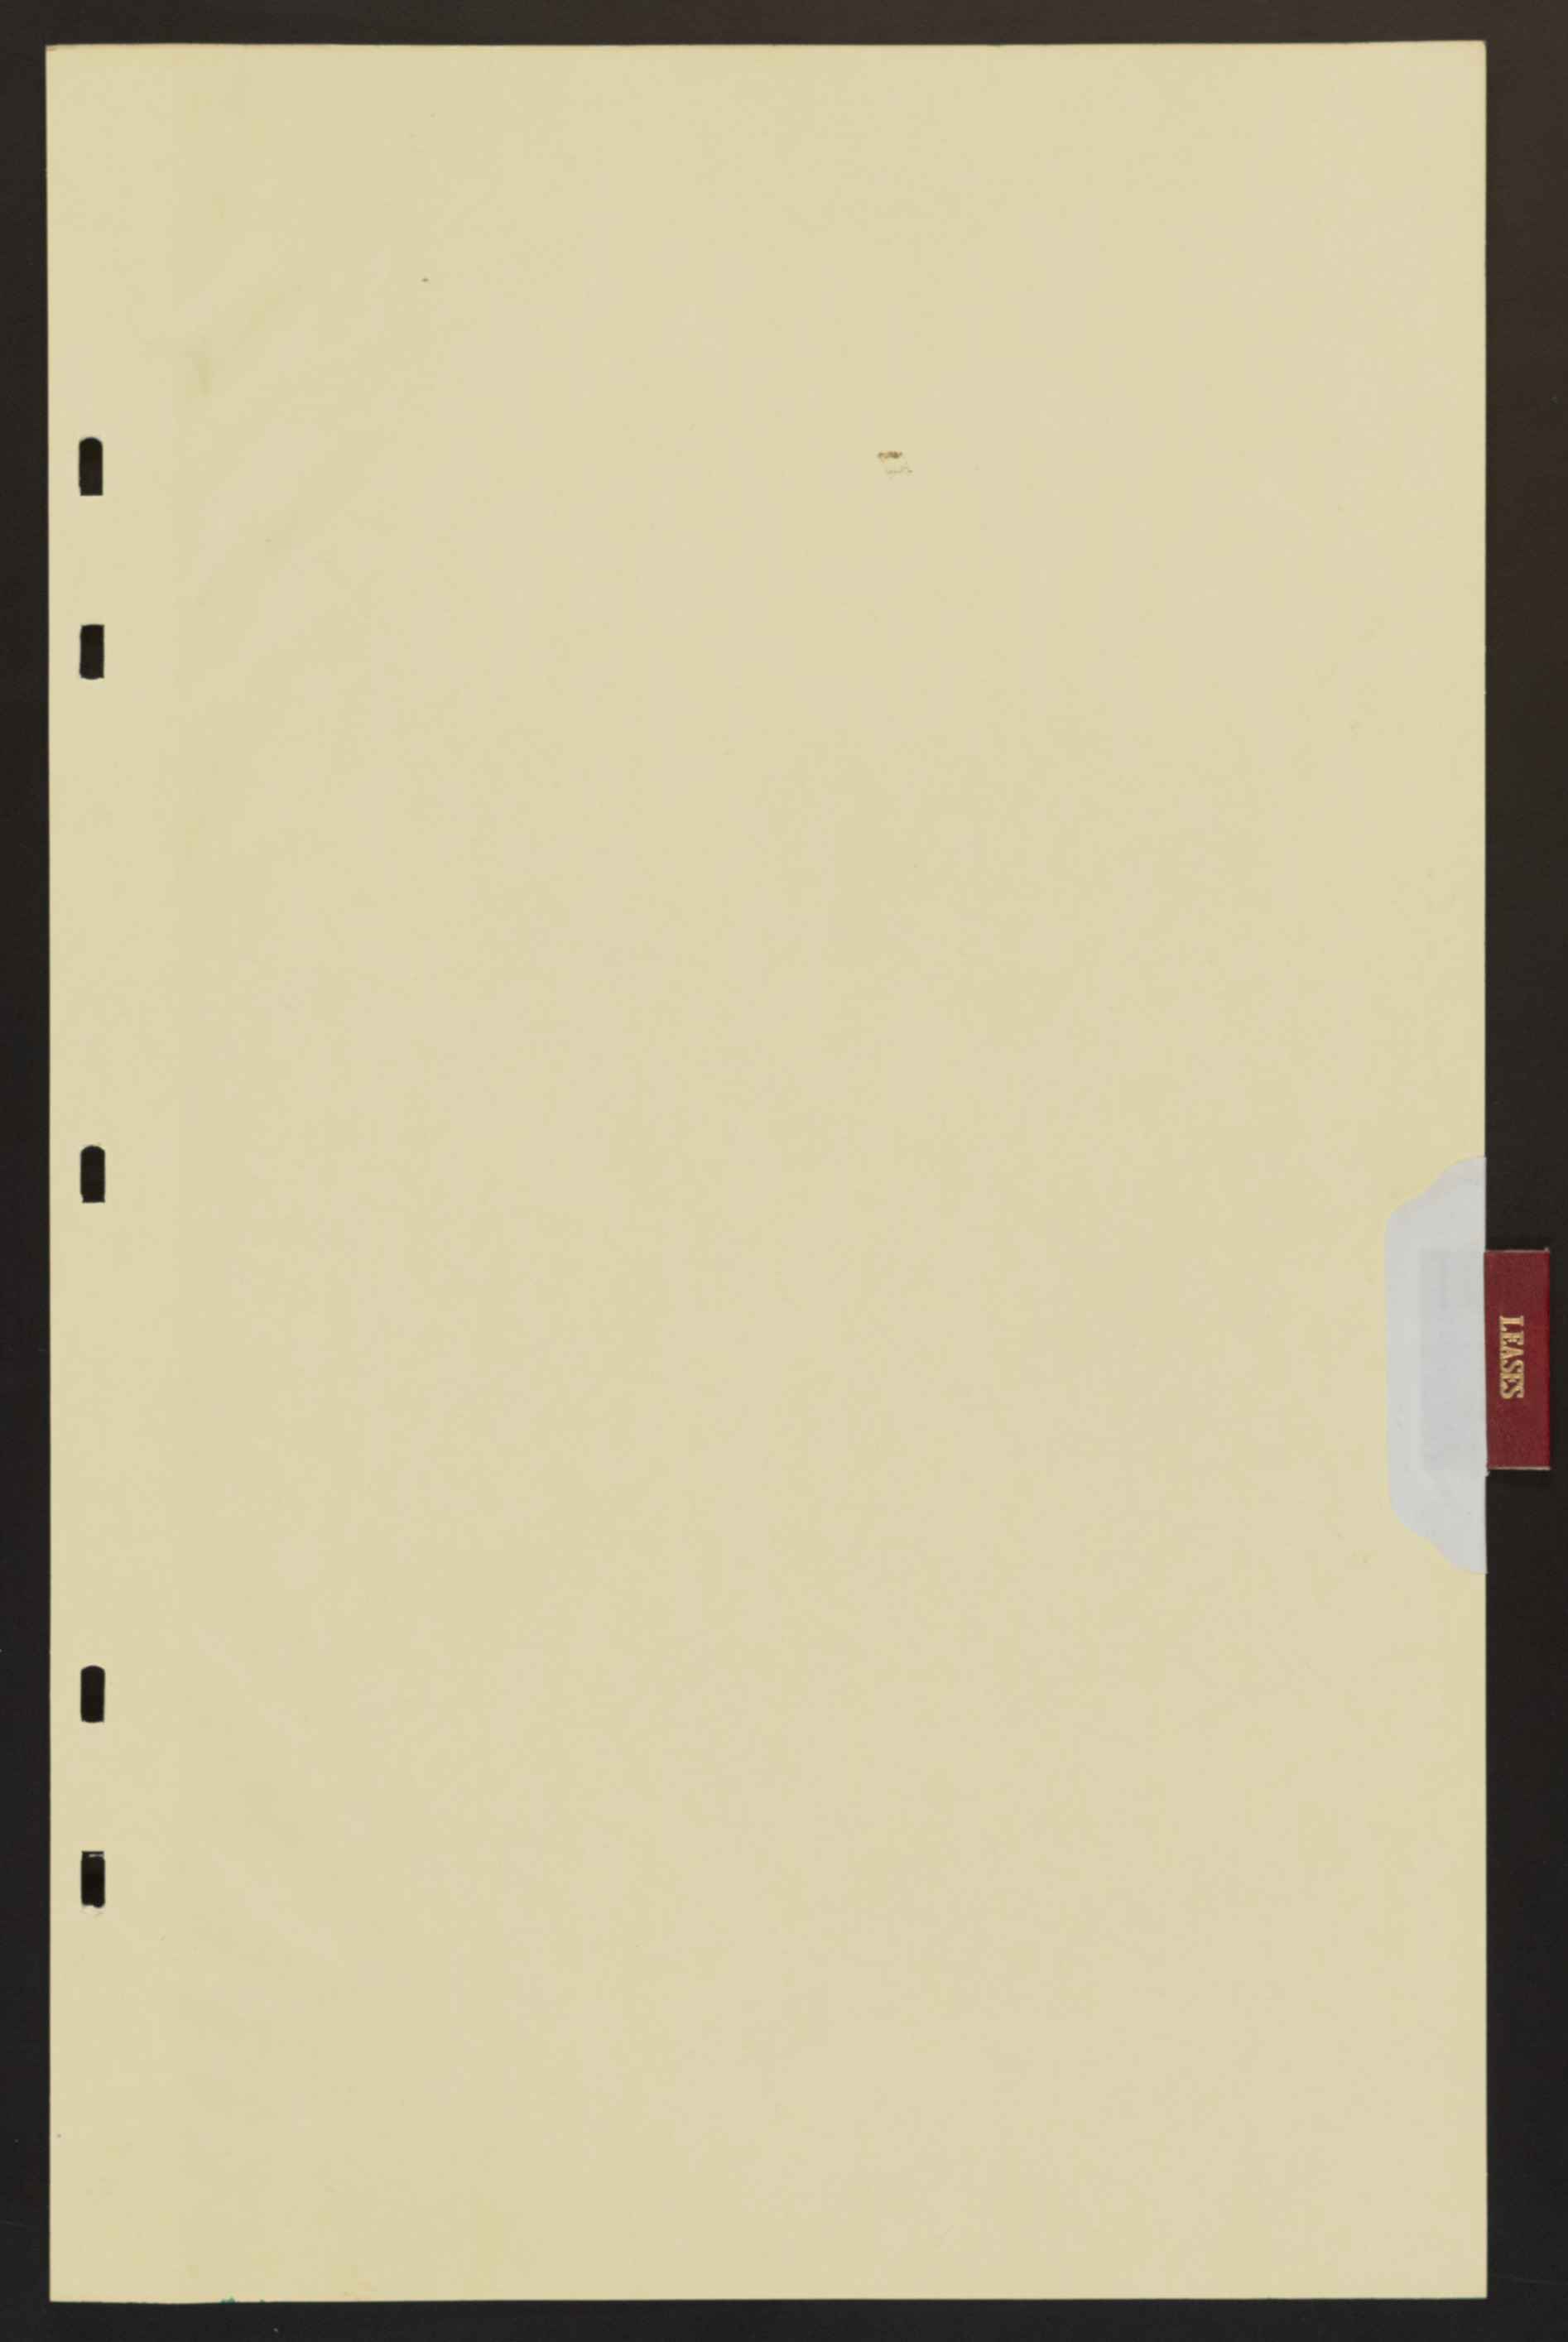 Las Vegas City Commission Legal Documents, February 29, 1944 to February 21, 1945, lvc000016-92